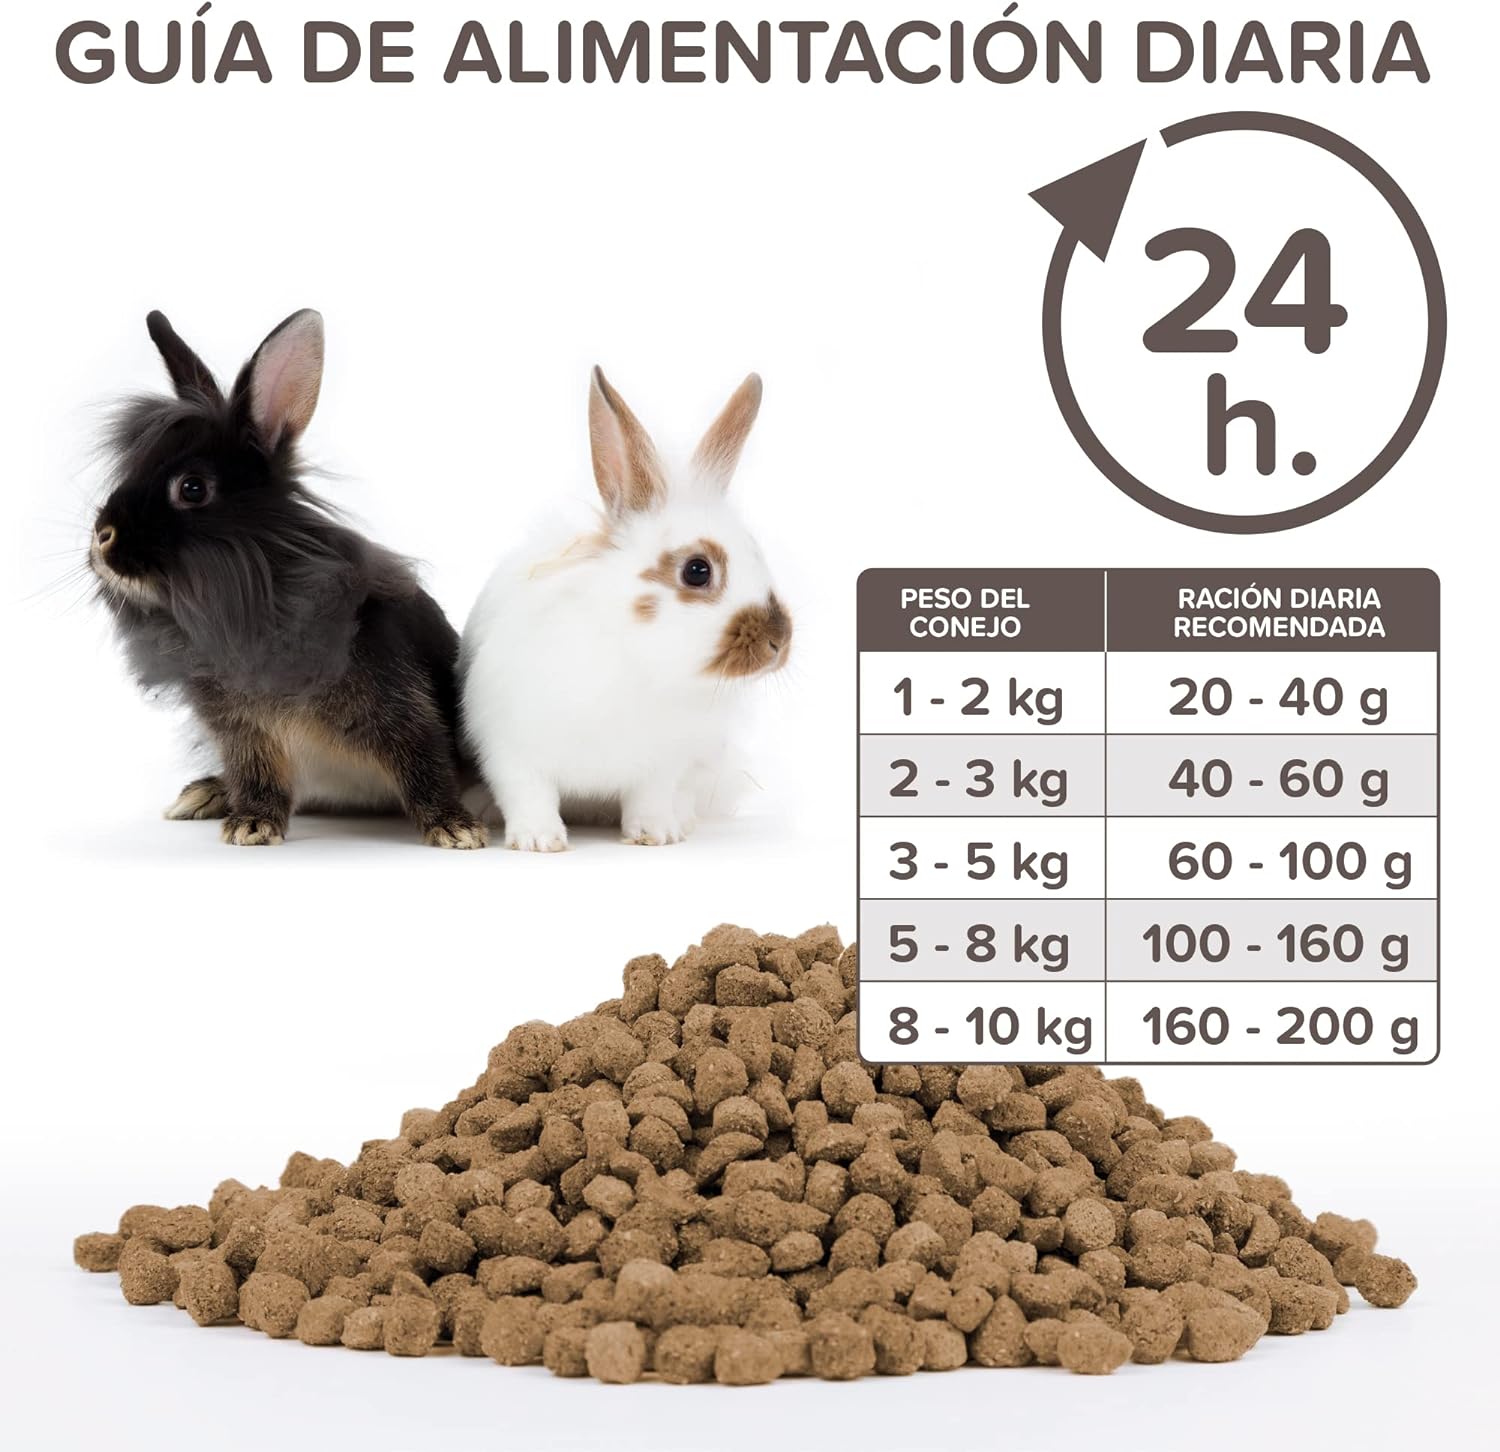 Care+ Rabbit Food 1.5kg